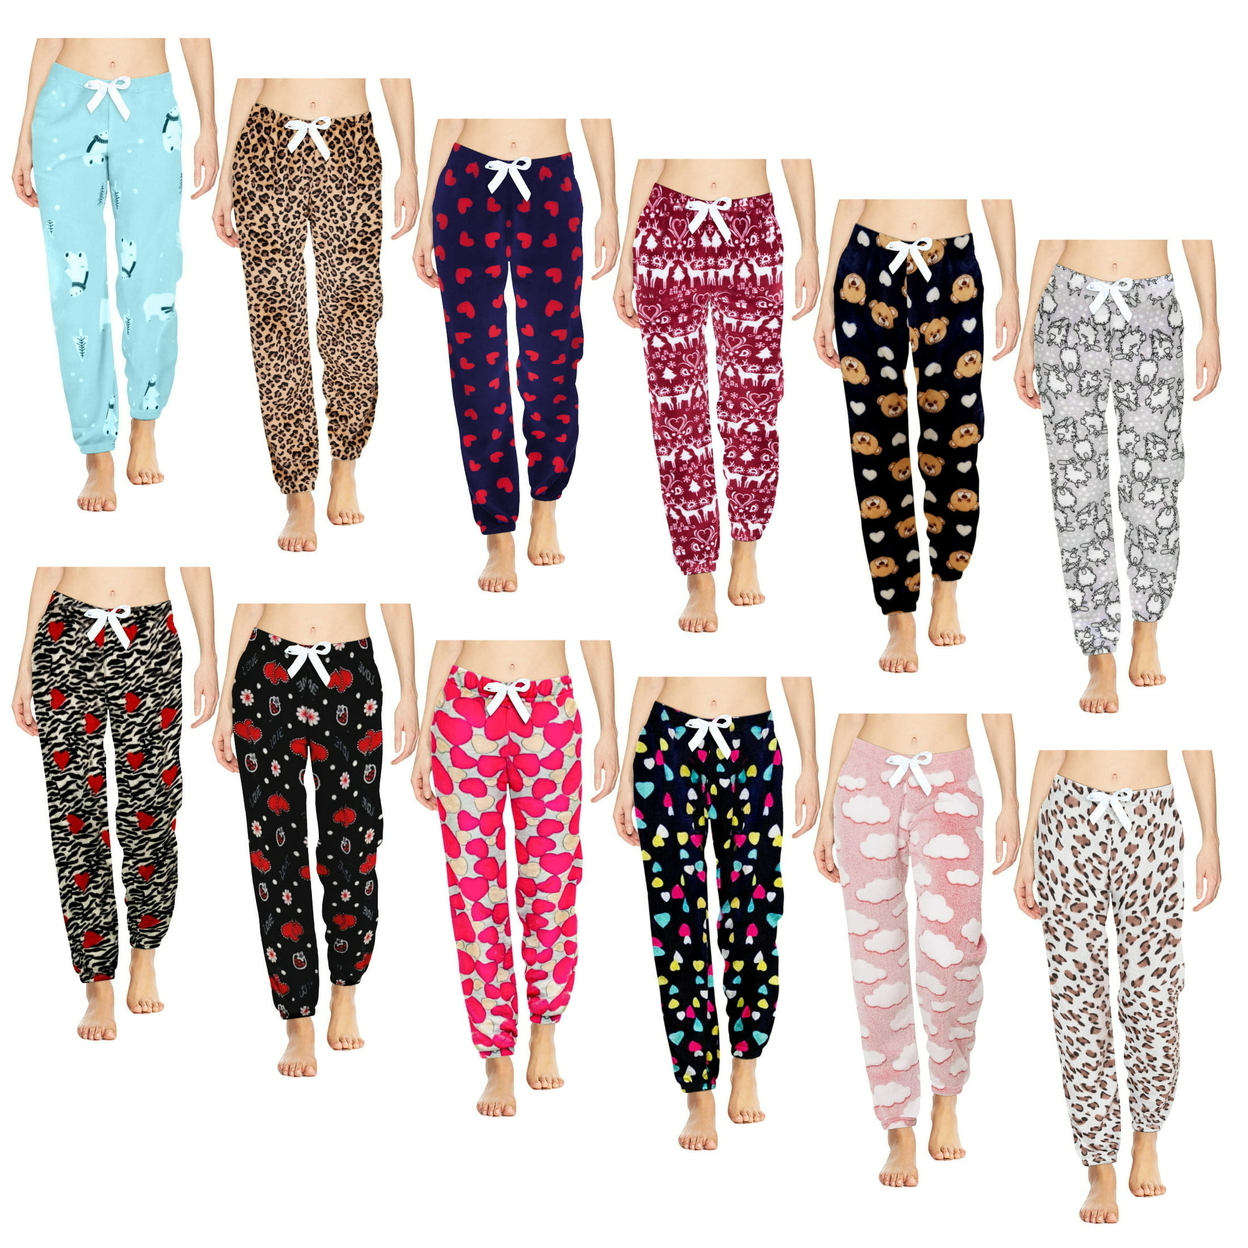 4-Pack: Women's Printed Ultra-Soft Comfy Stretch Micro-Fleece Pajama Lounge Pants - Medium, Shapes